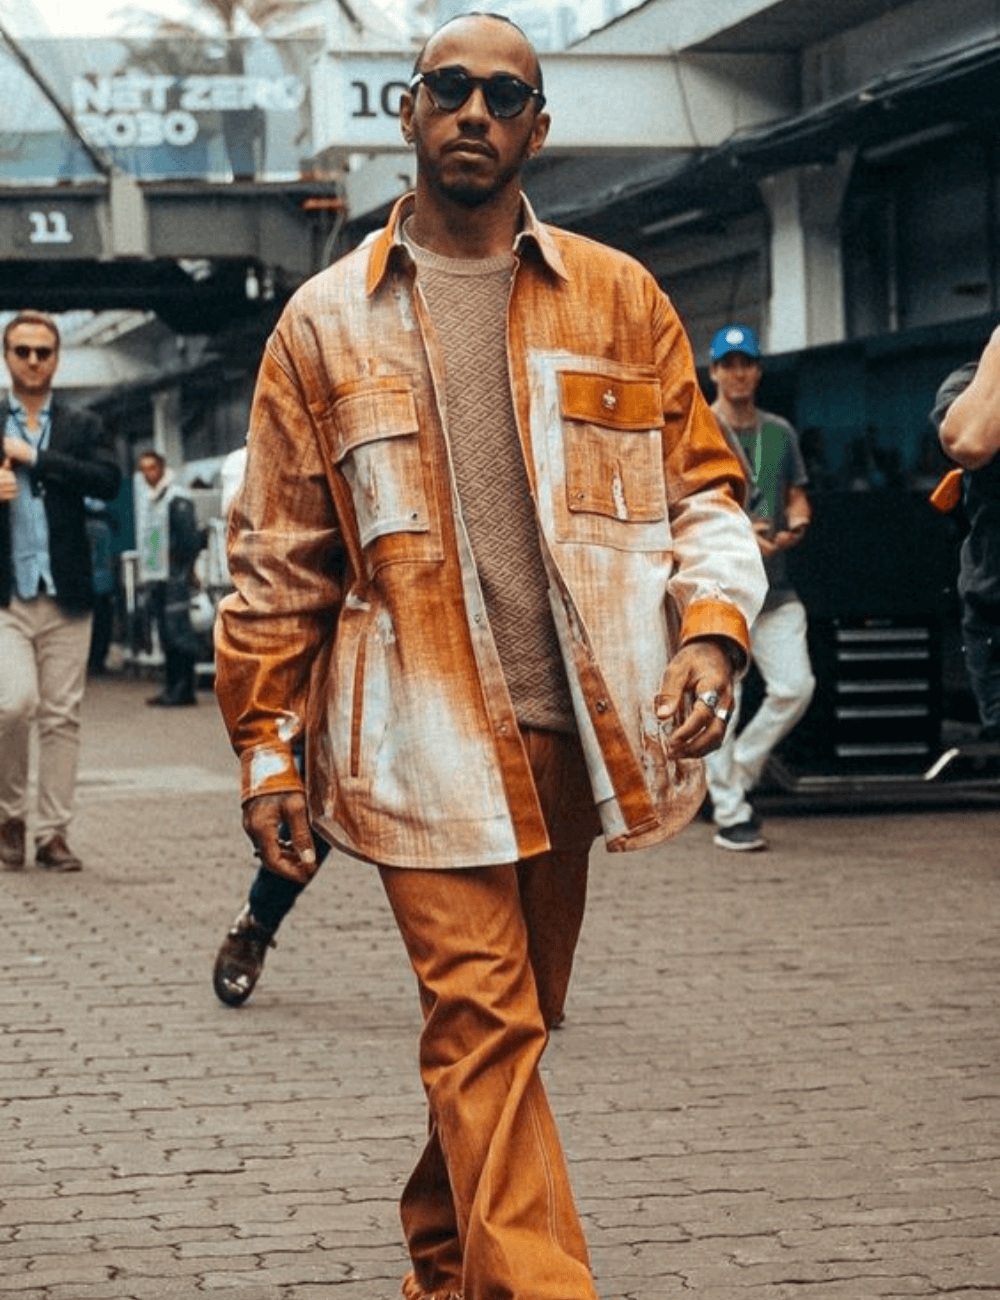 Lewis Hamilton - calça laranja, jaqueta laranja estampada, blusa branca e óculos de sol - Lewis Hamilton - outono - homem negro andando na rua usando óculos de sol - https://stealthelook.com.br